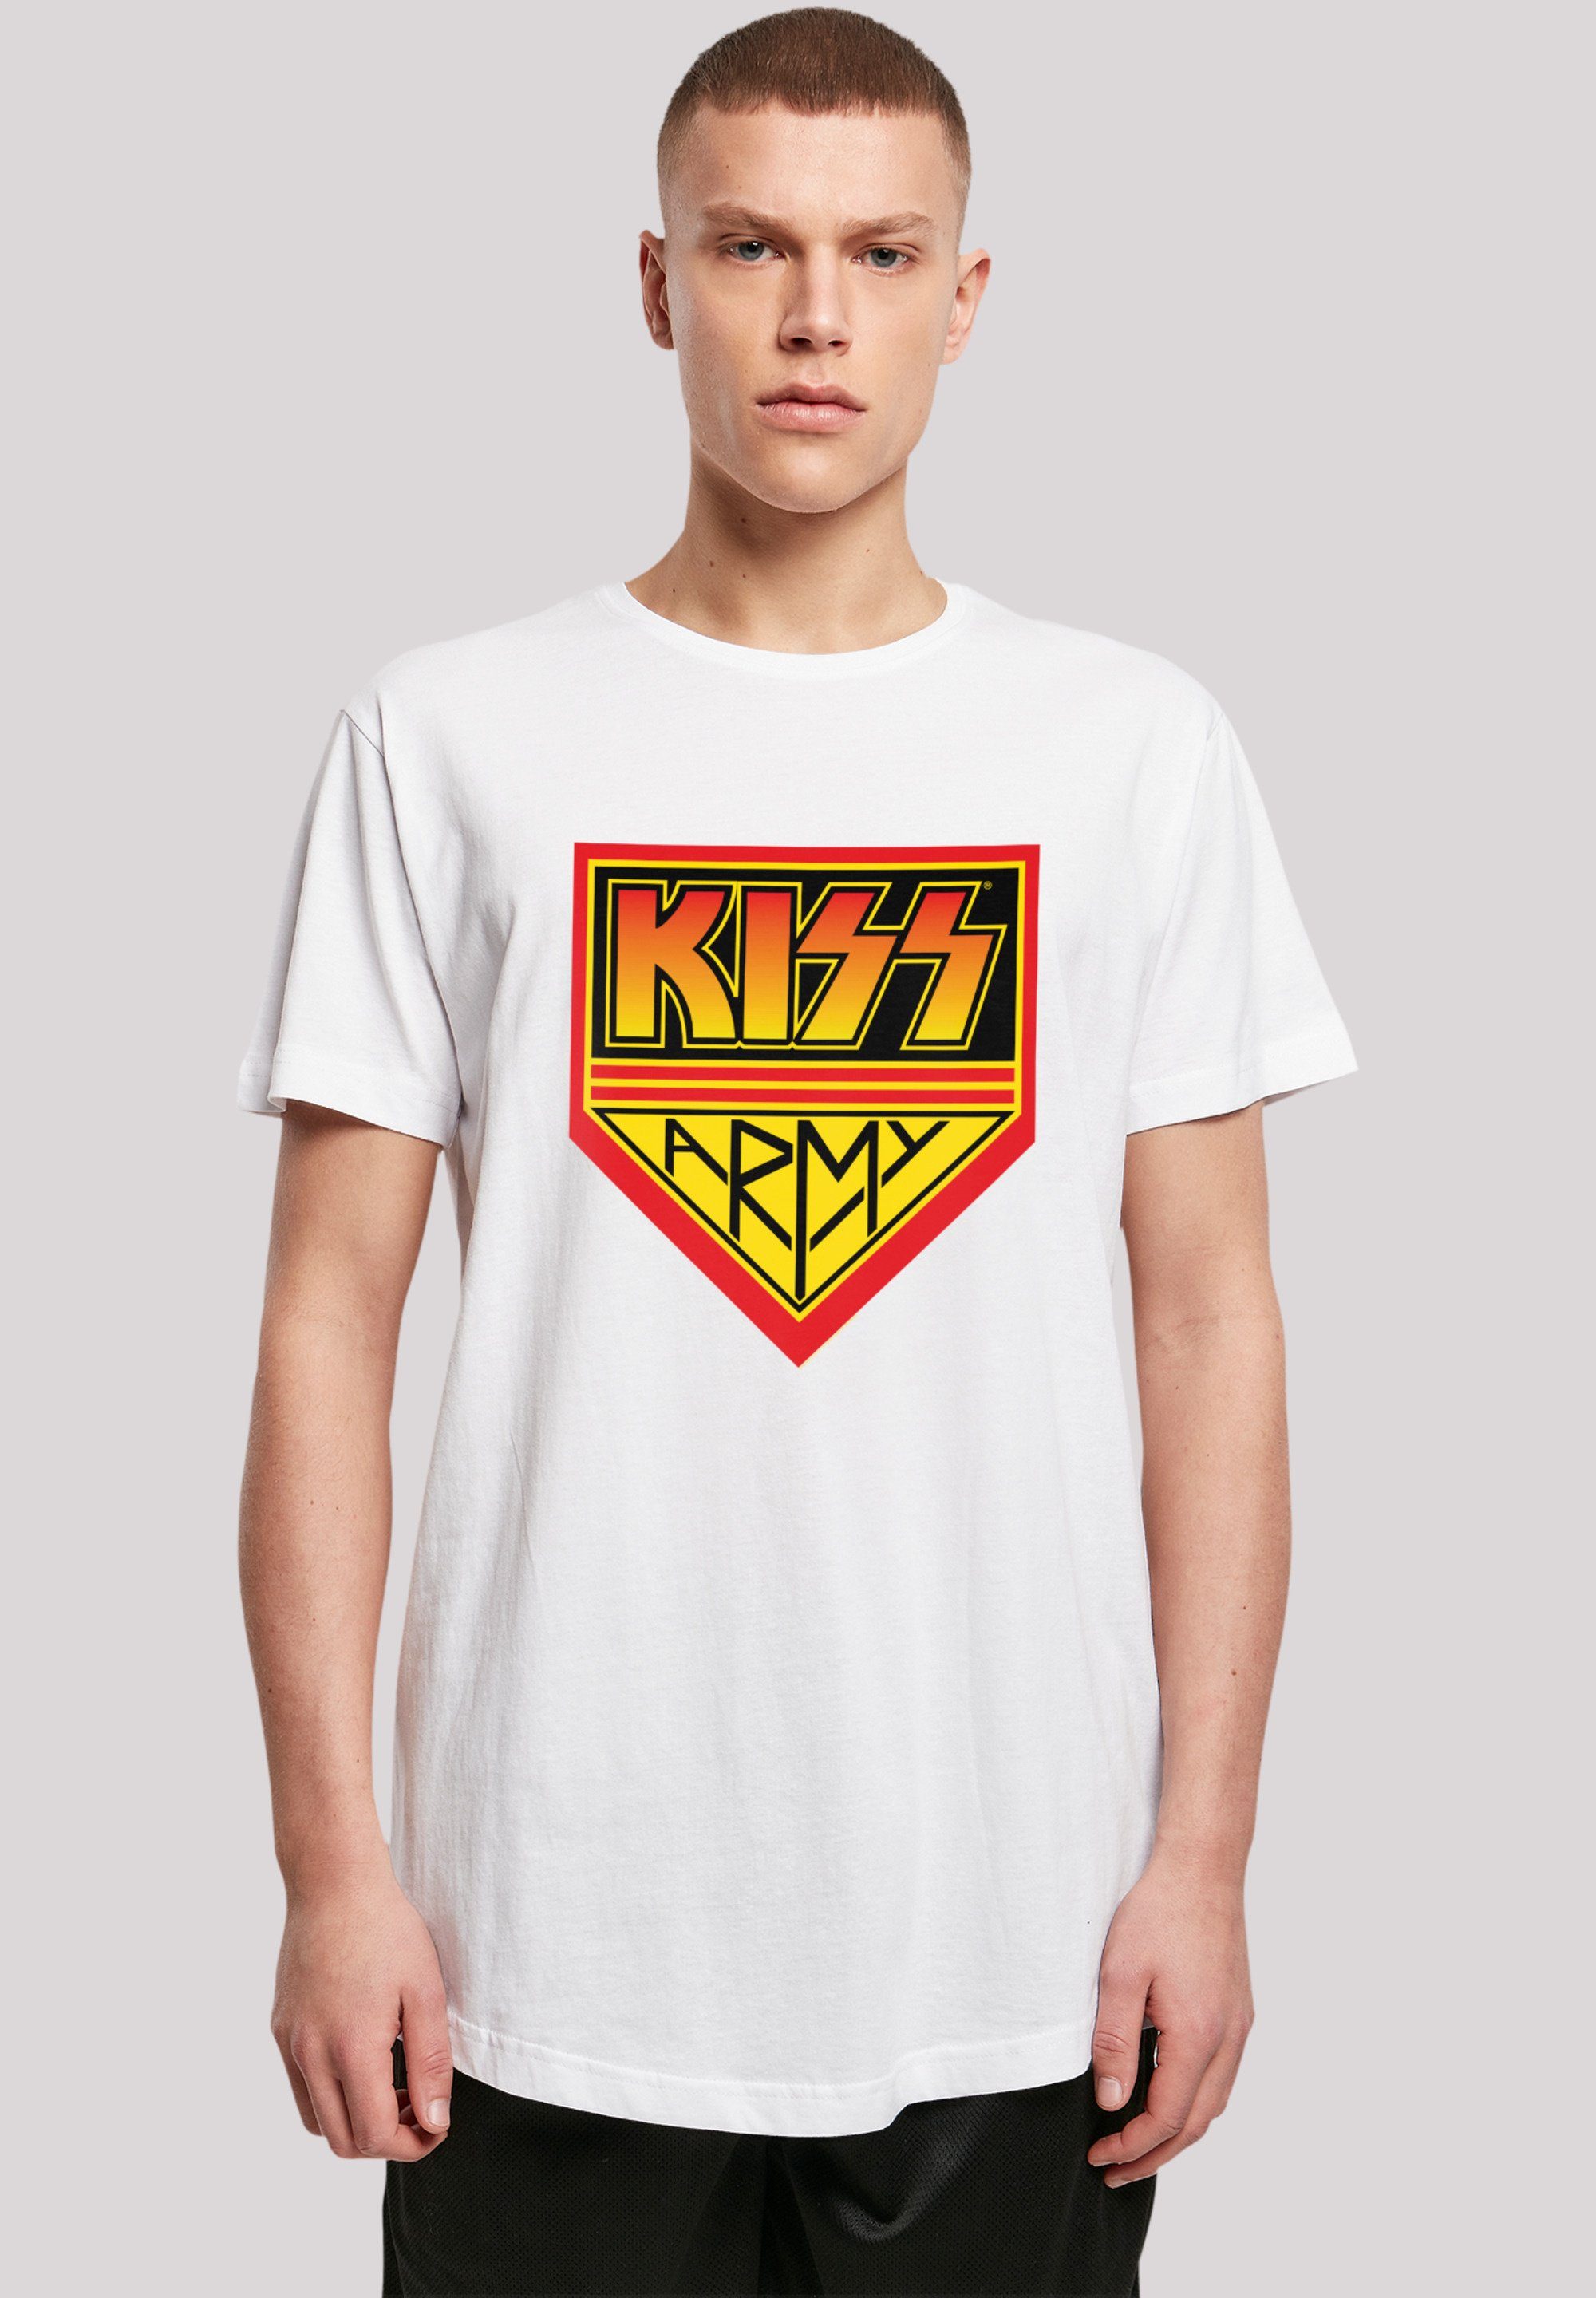 F4NT4STIC T-Shirt Kiss Rock Band Army Logo Premium Qualität, Musik, By Rock Off weiß | T-Shirts